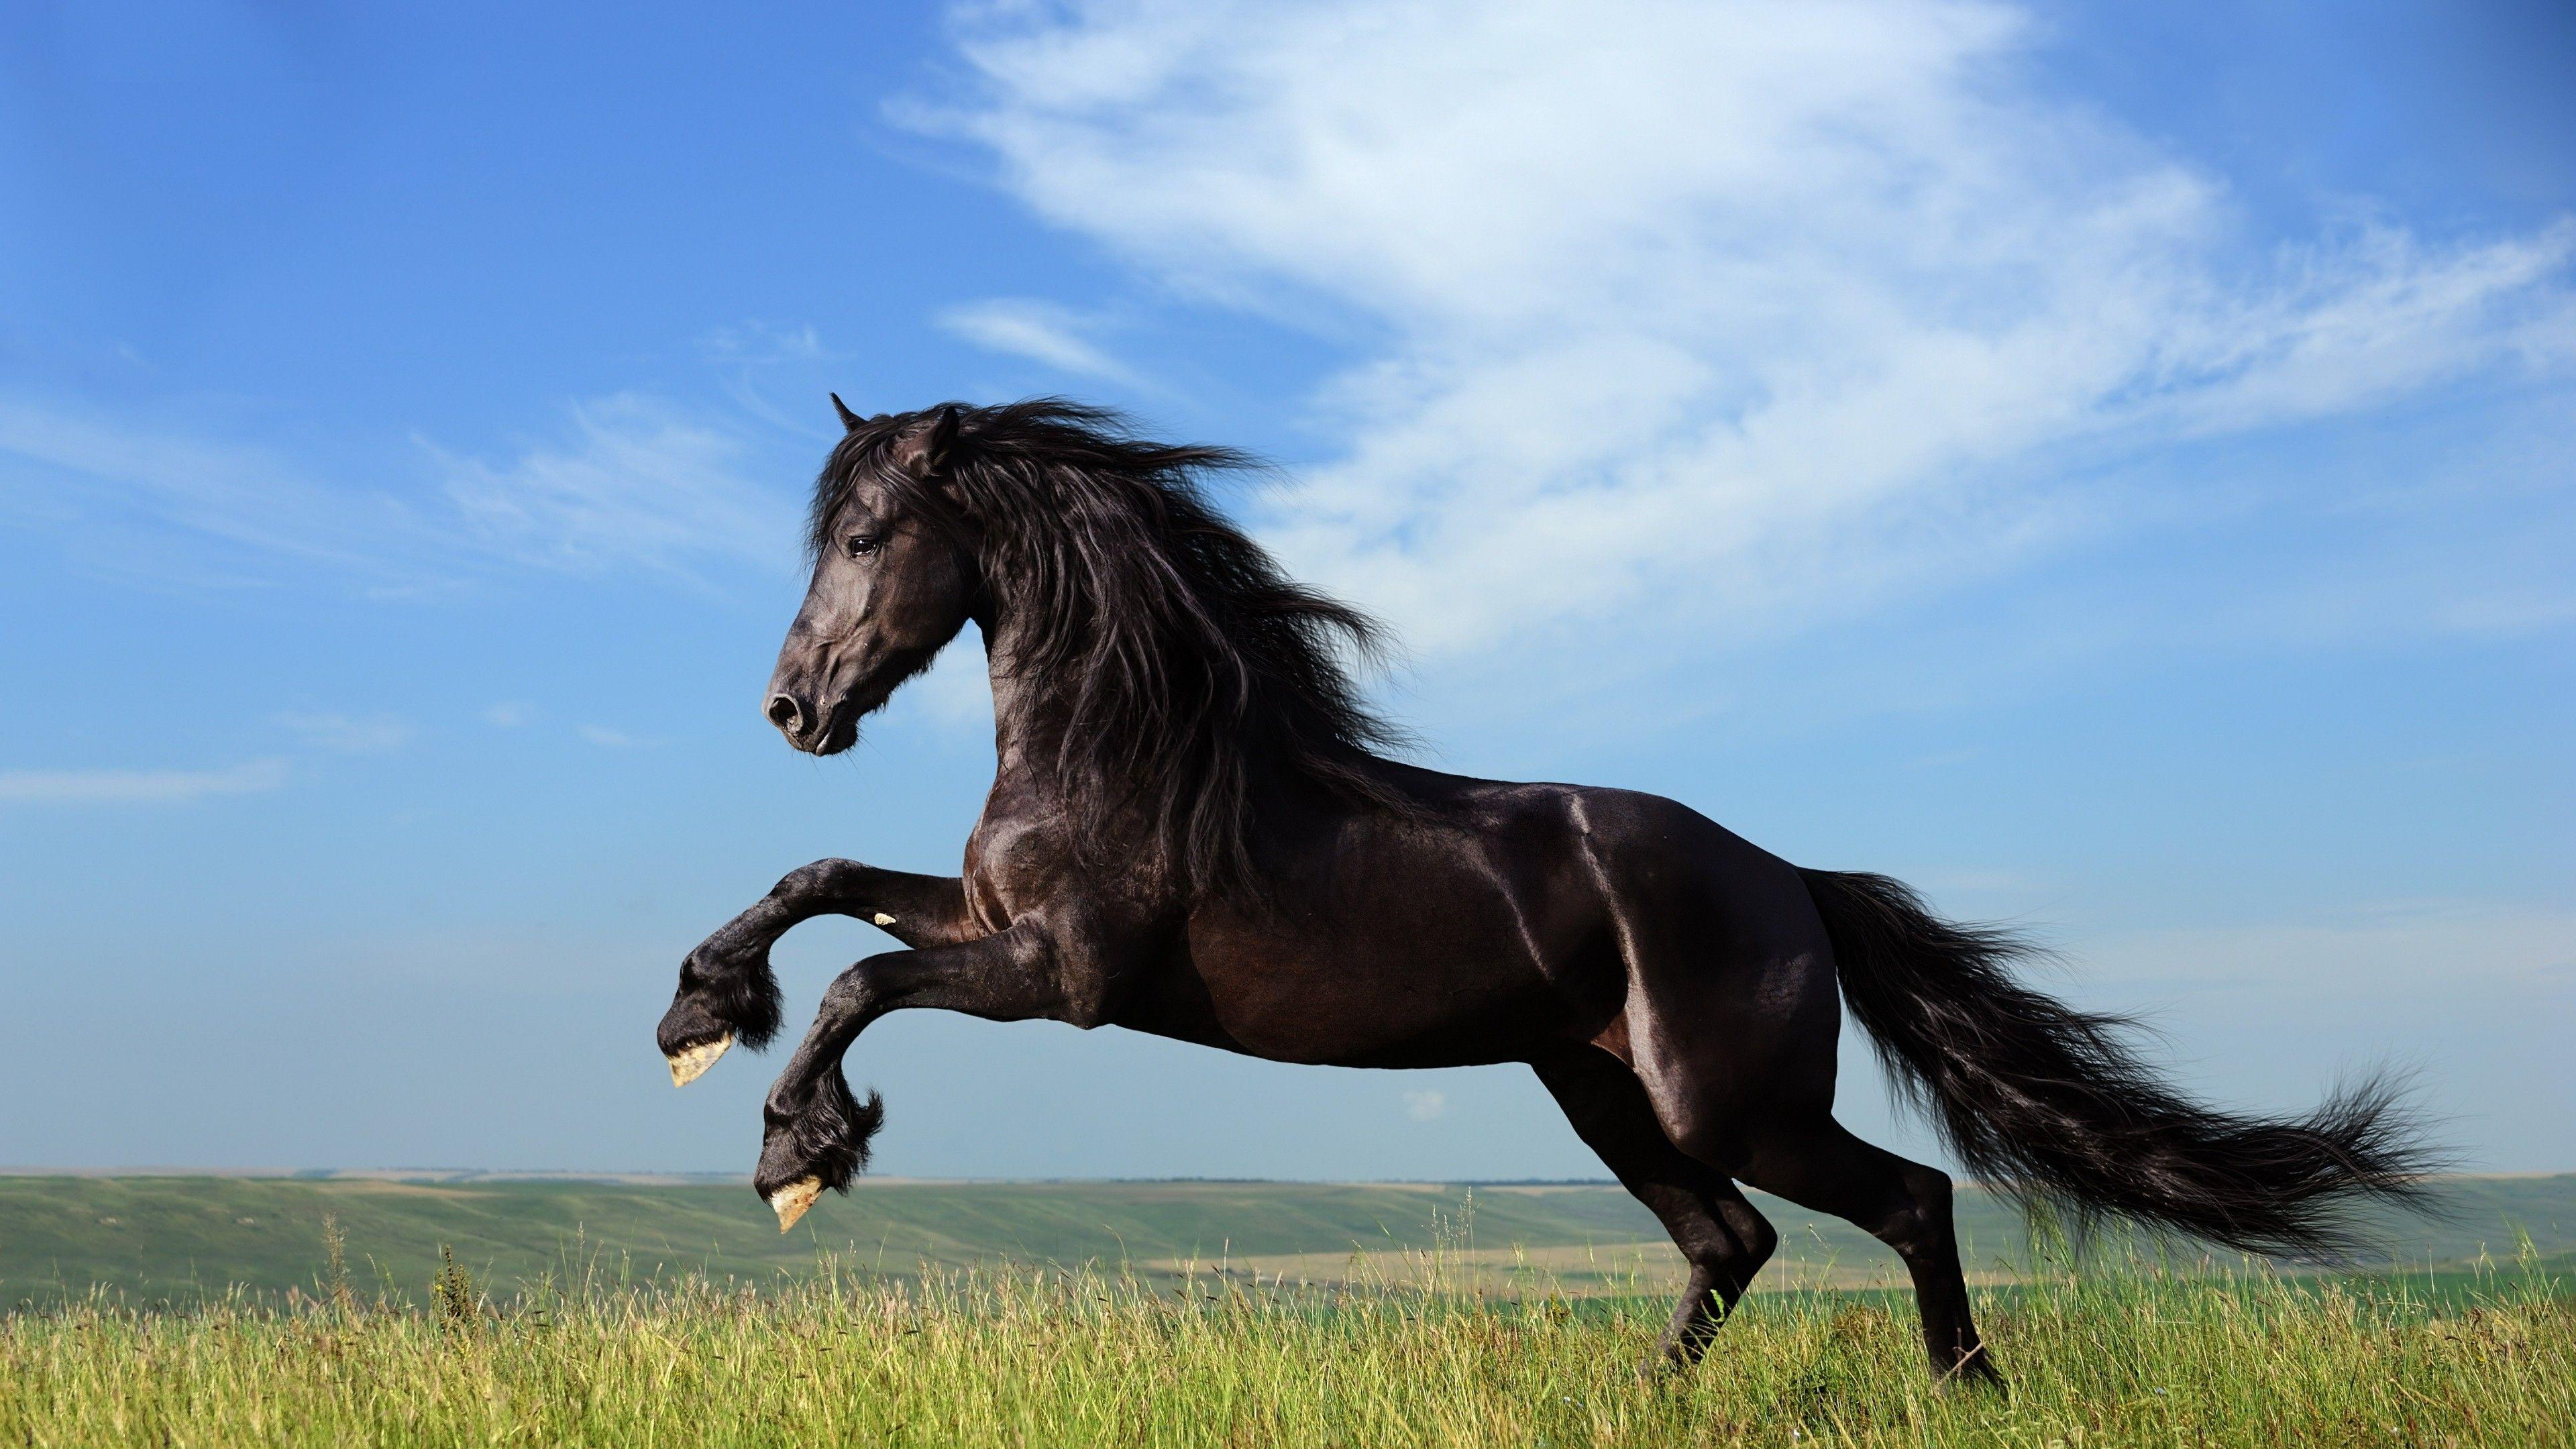 Horse Jump, HD Animals, 4k Wallpaper, Image, Background, Photo